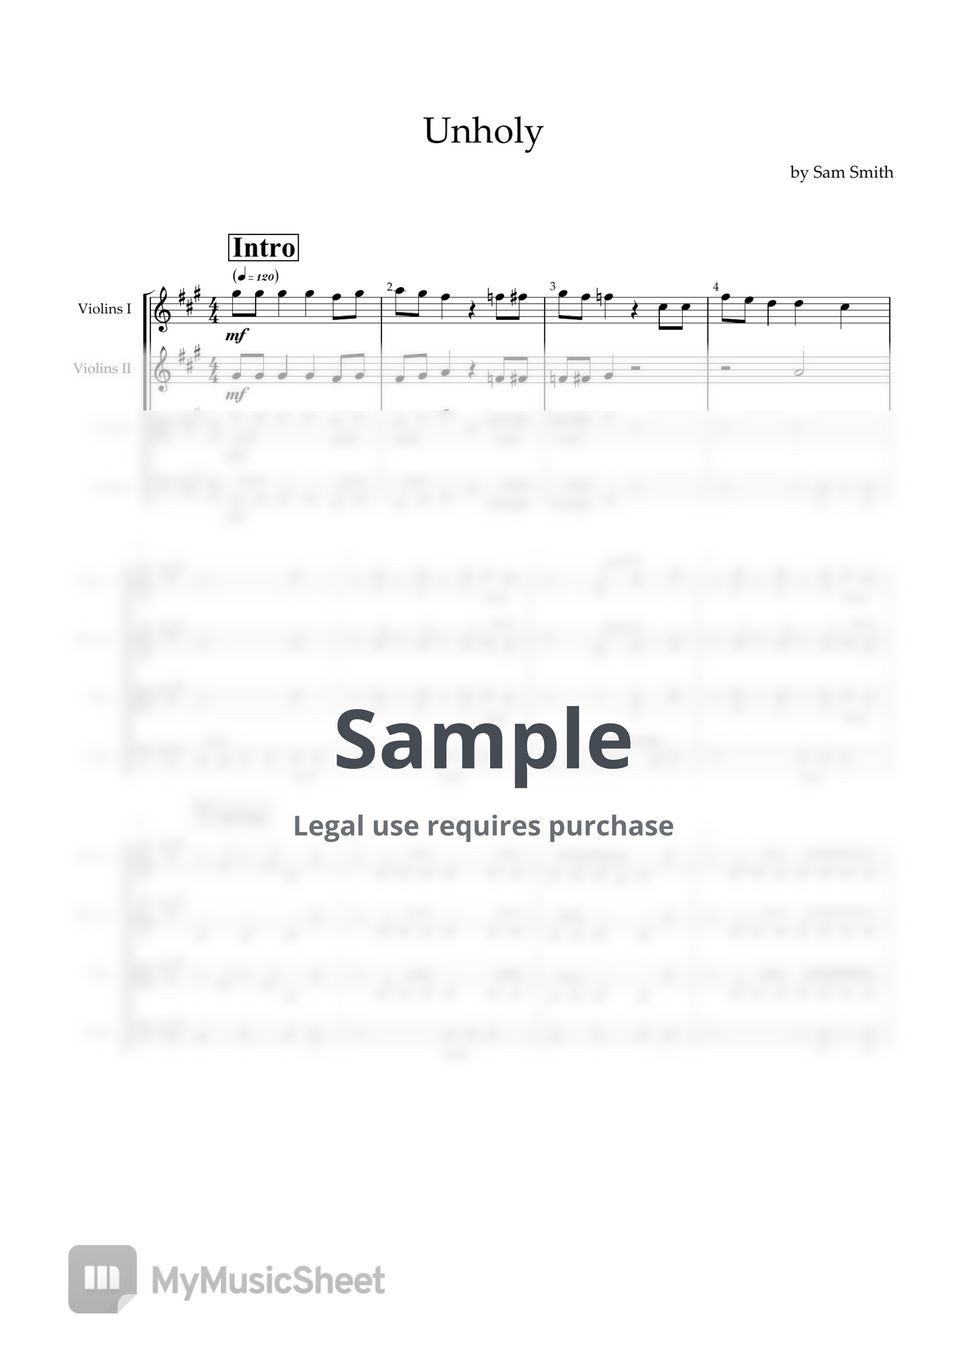 Sam Smith - Unholy (for string quartet Score+Parts) by ScoreProduction